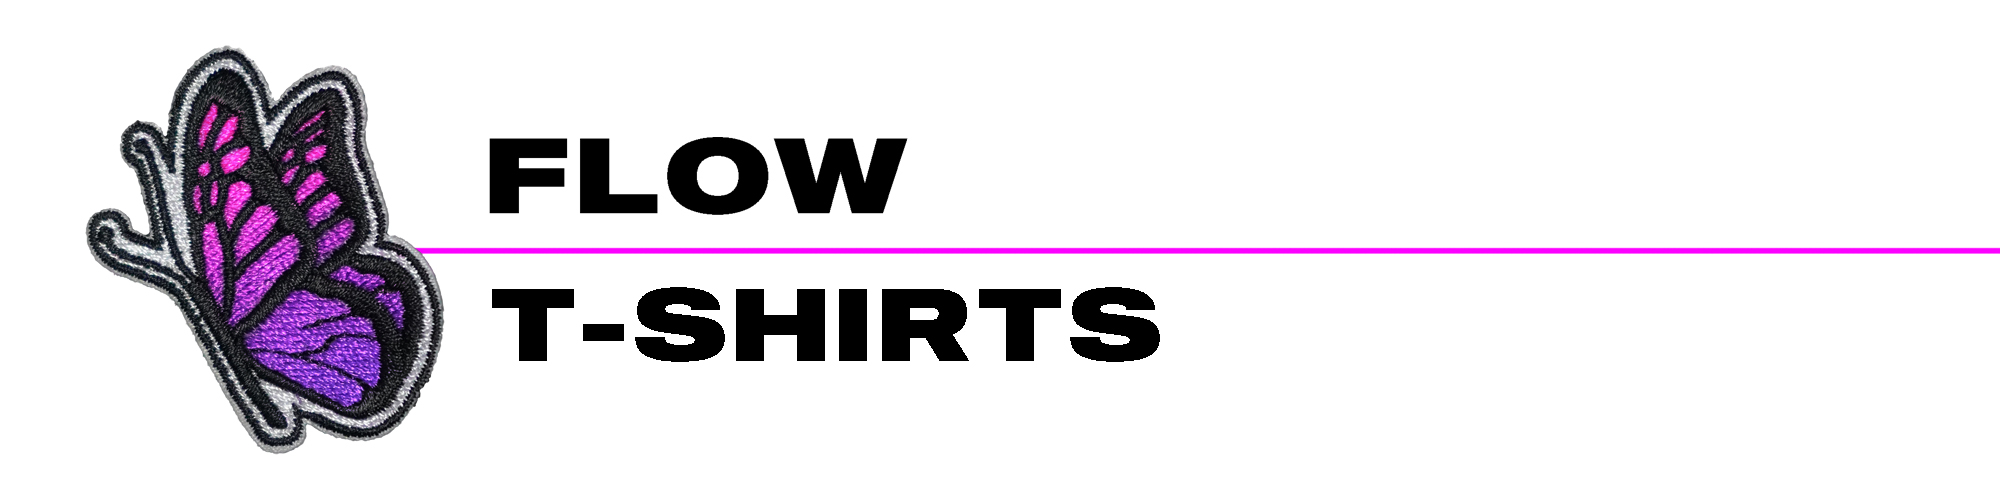 Flow T-Shirts Header